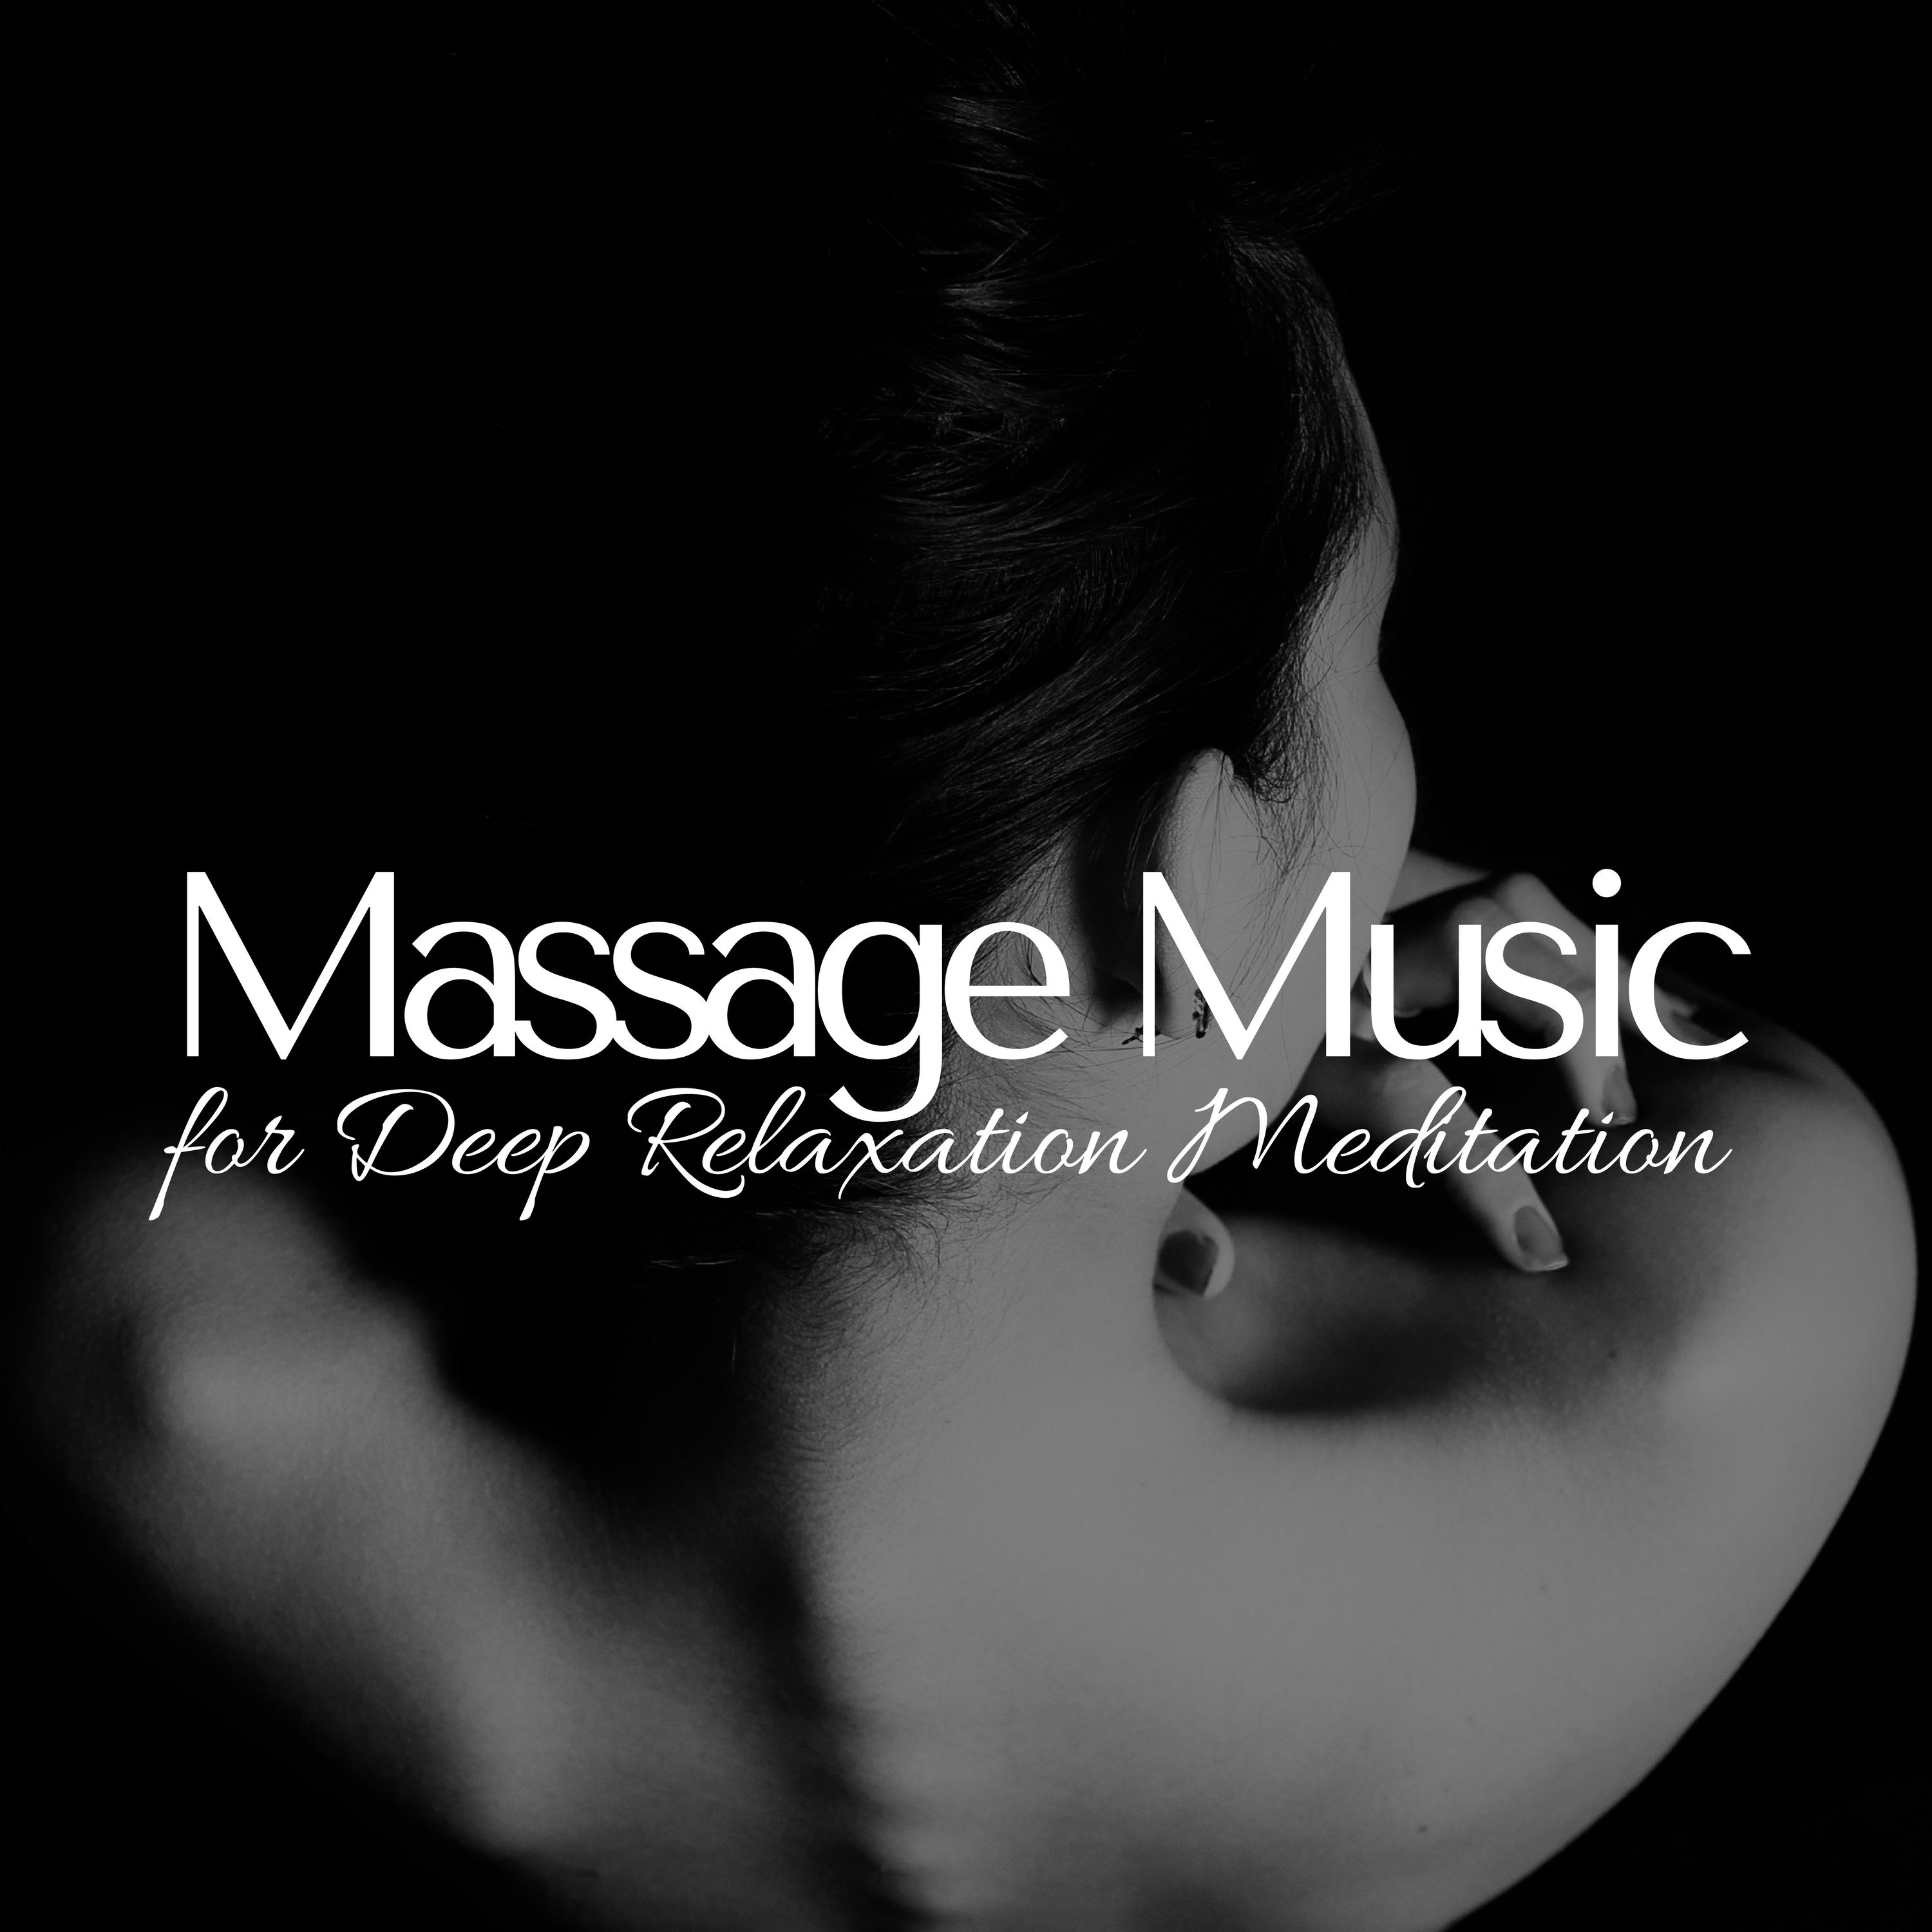 Massage Music for Deep Relaxation Meditation